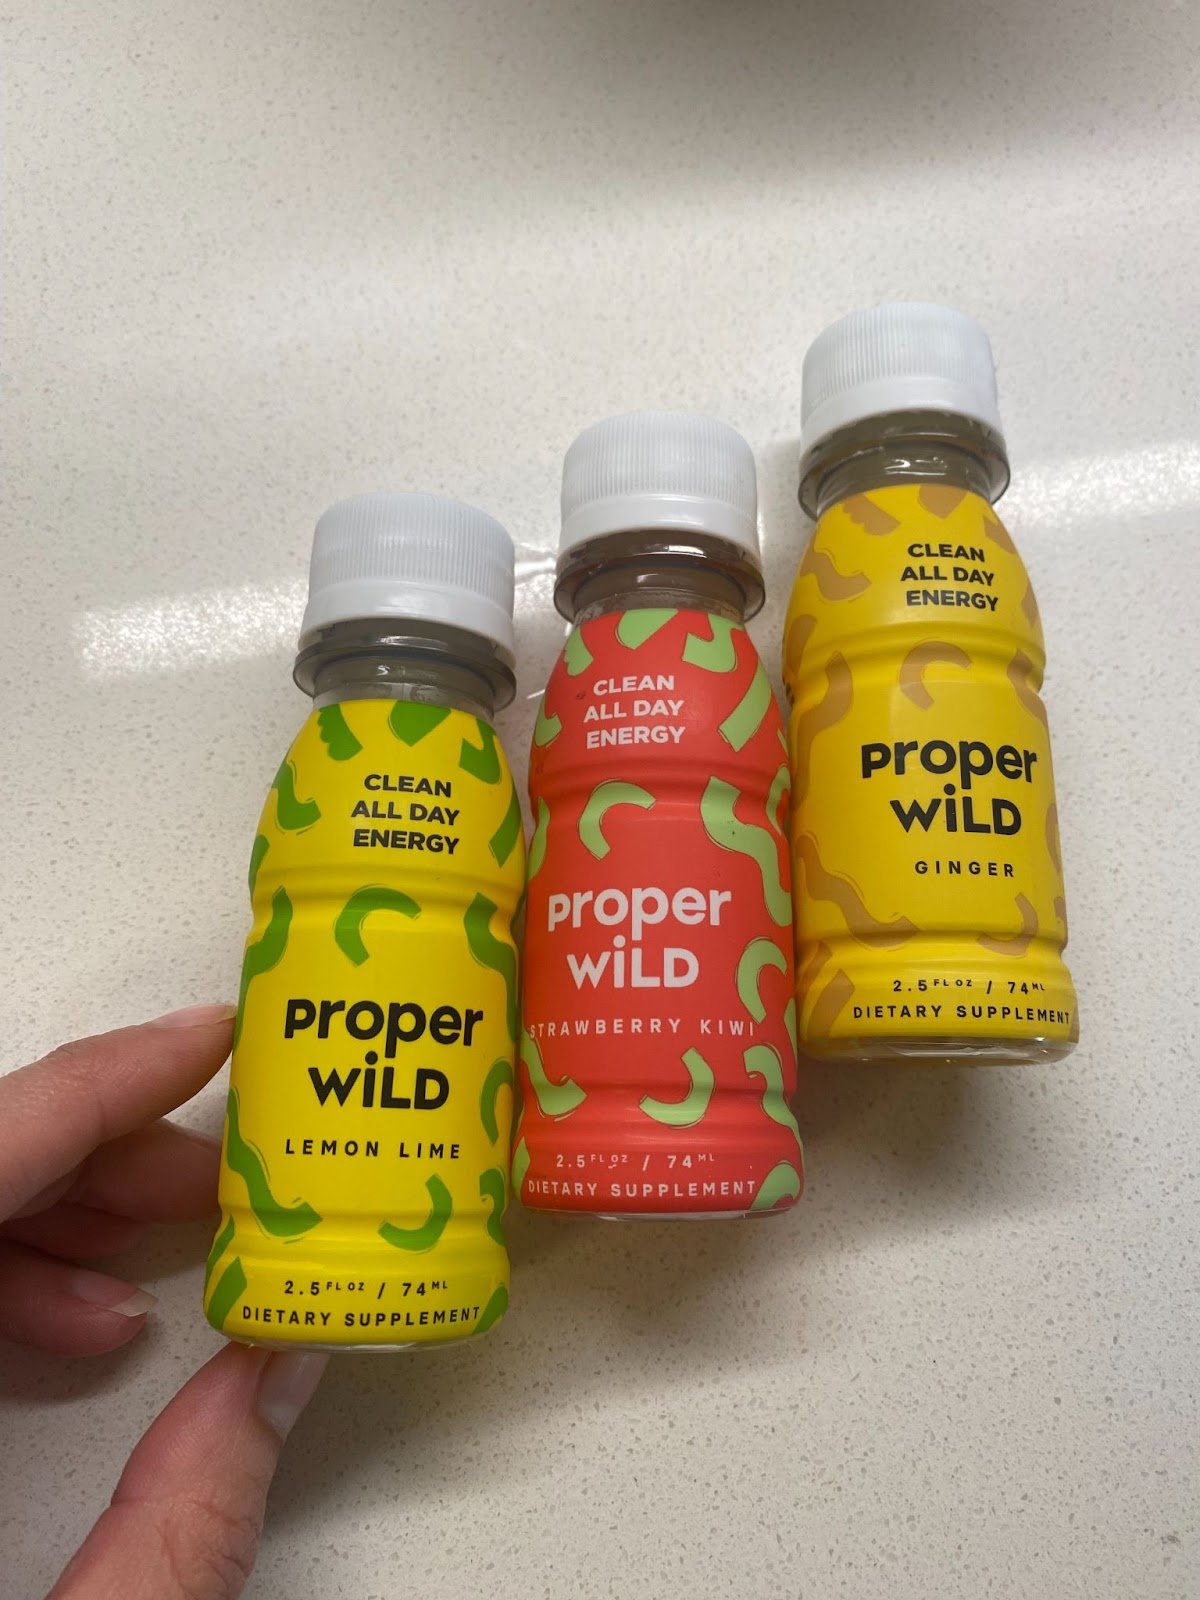 Proper Wild - Lemon Lime, Strawberry Kiwi, and Ginger